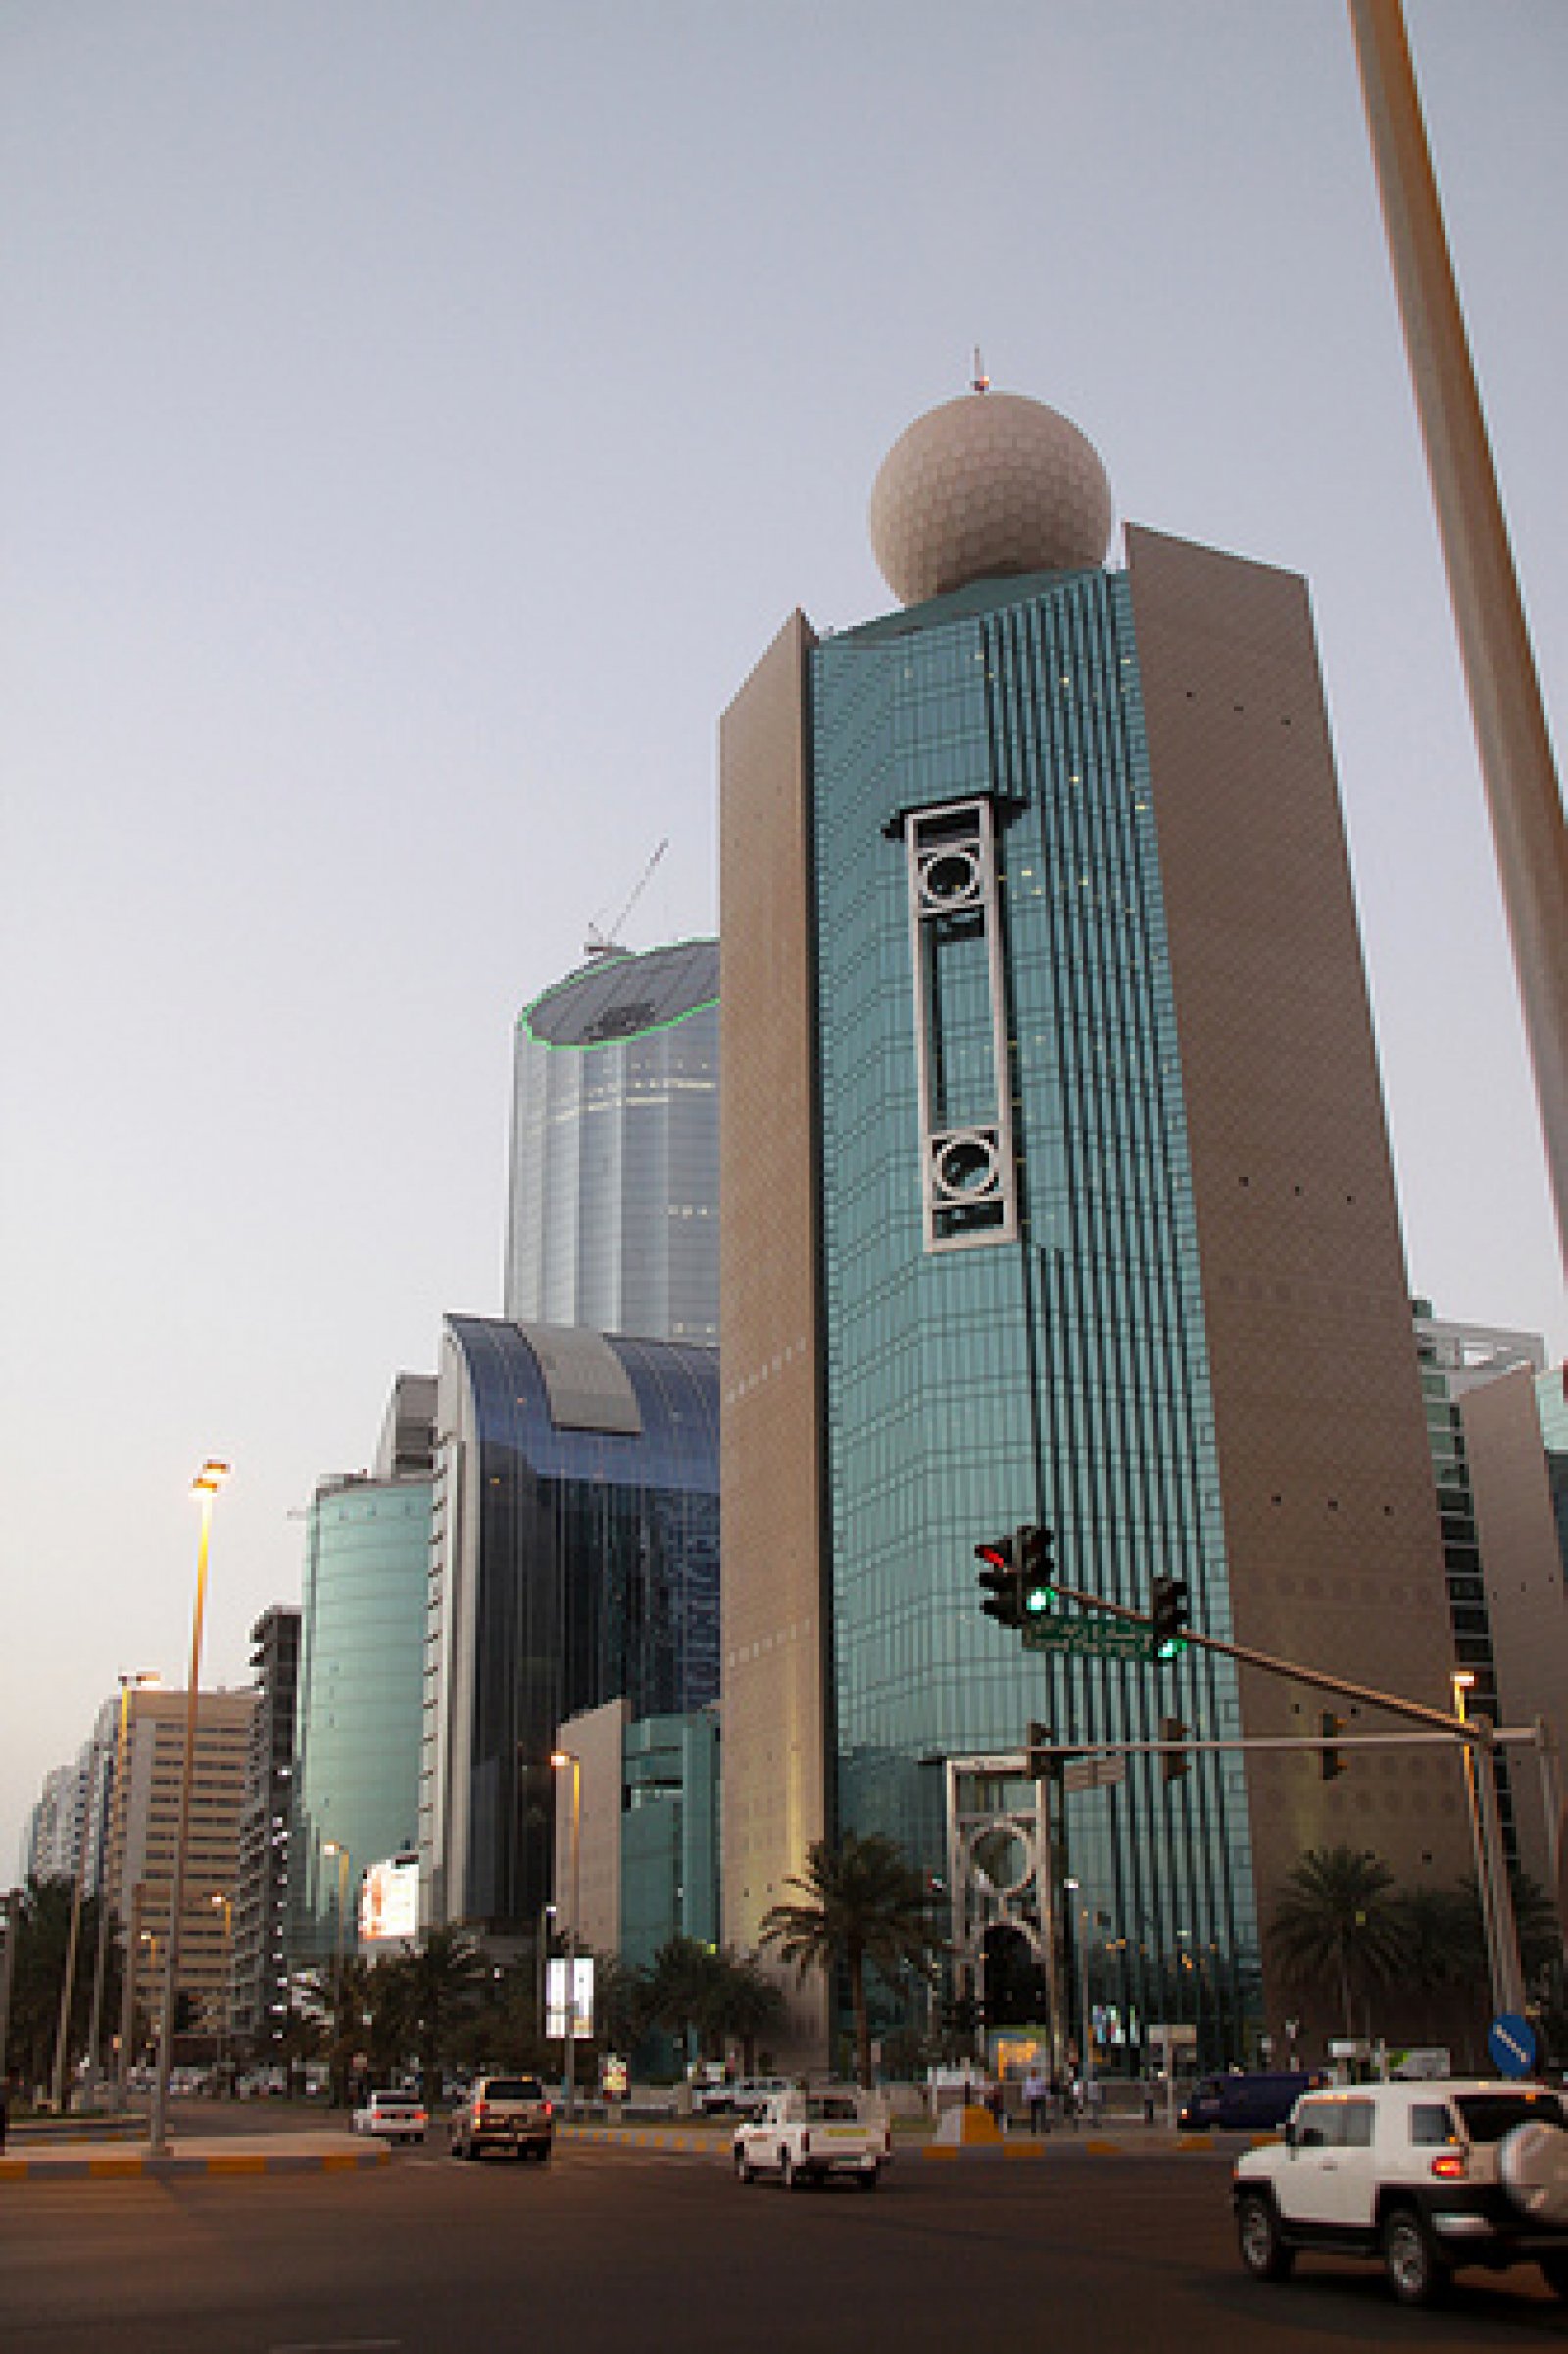 Shaikh Al Otaiba Towers,Abu Dhabi, U.A.E.